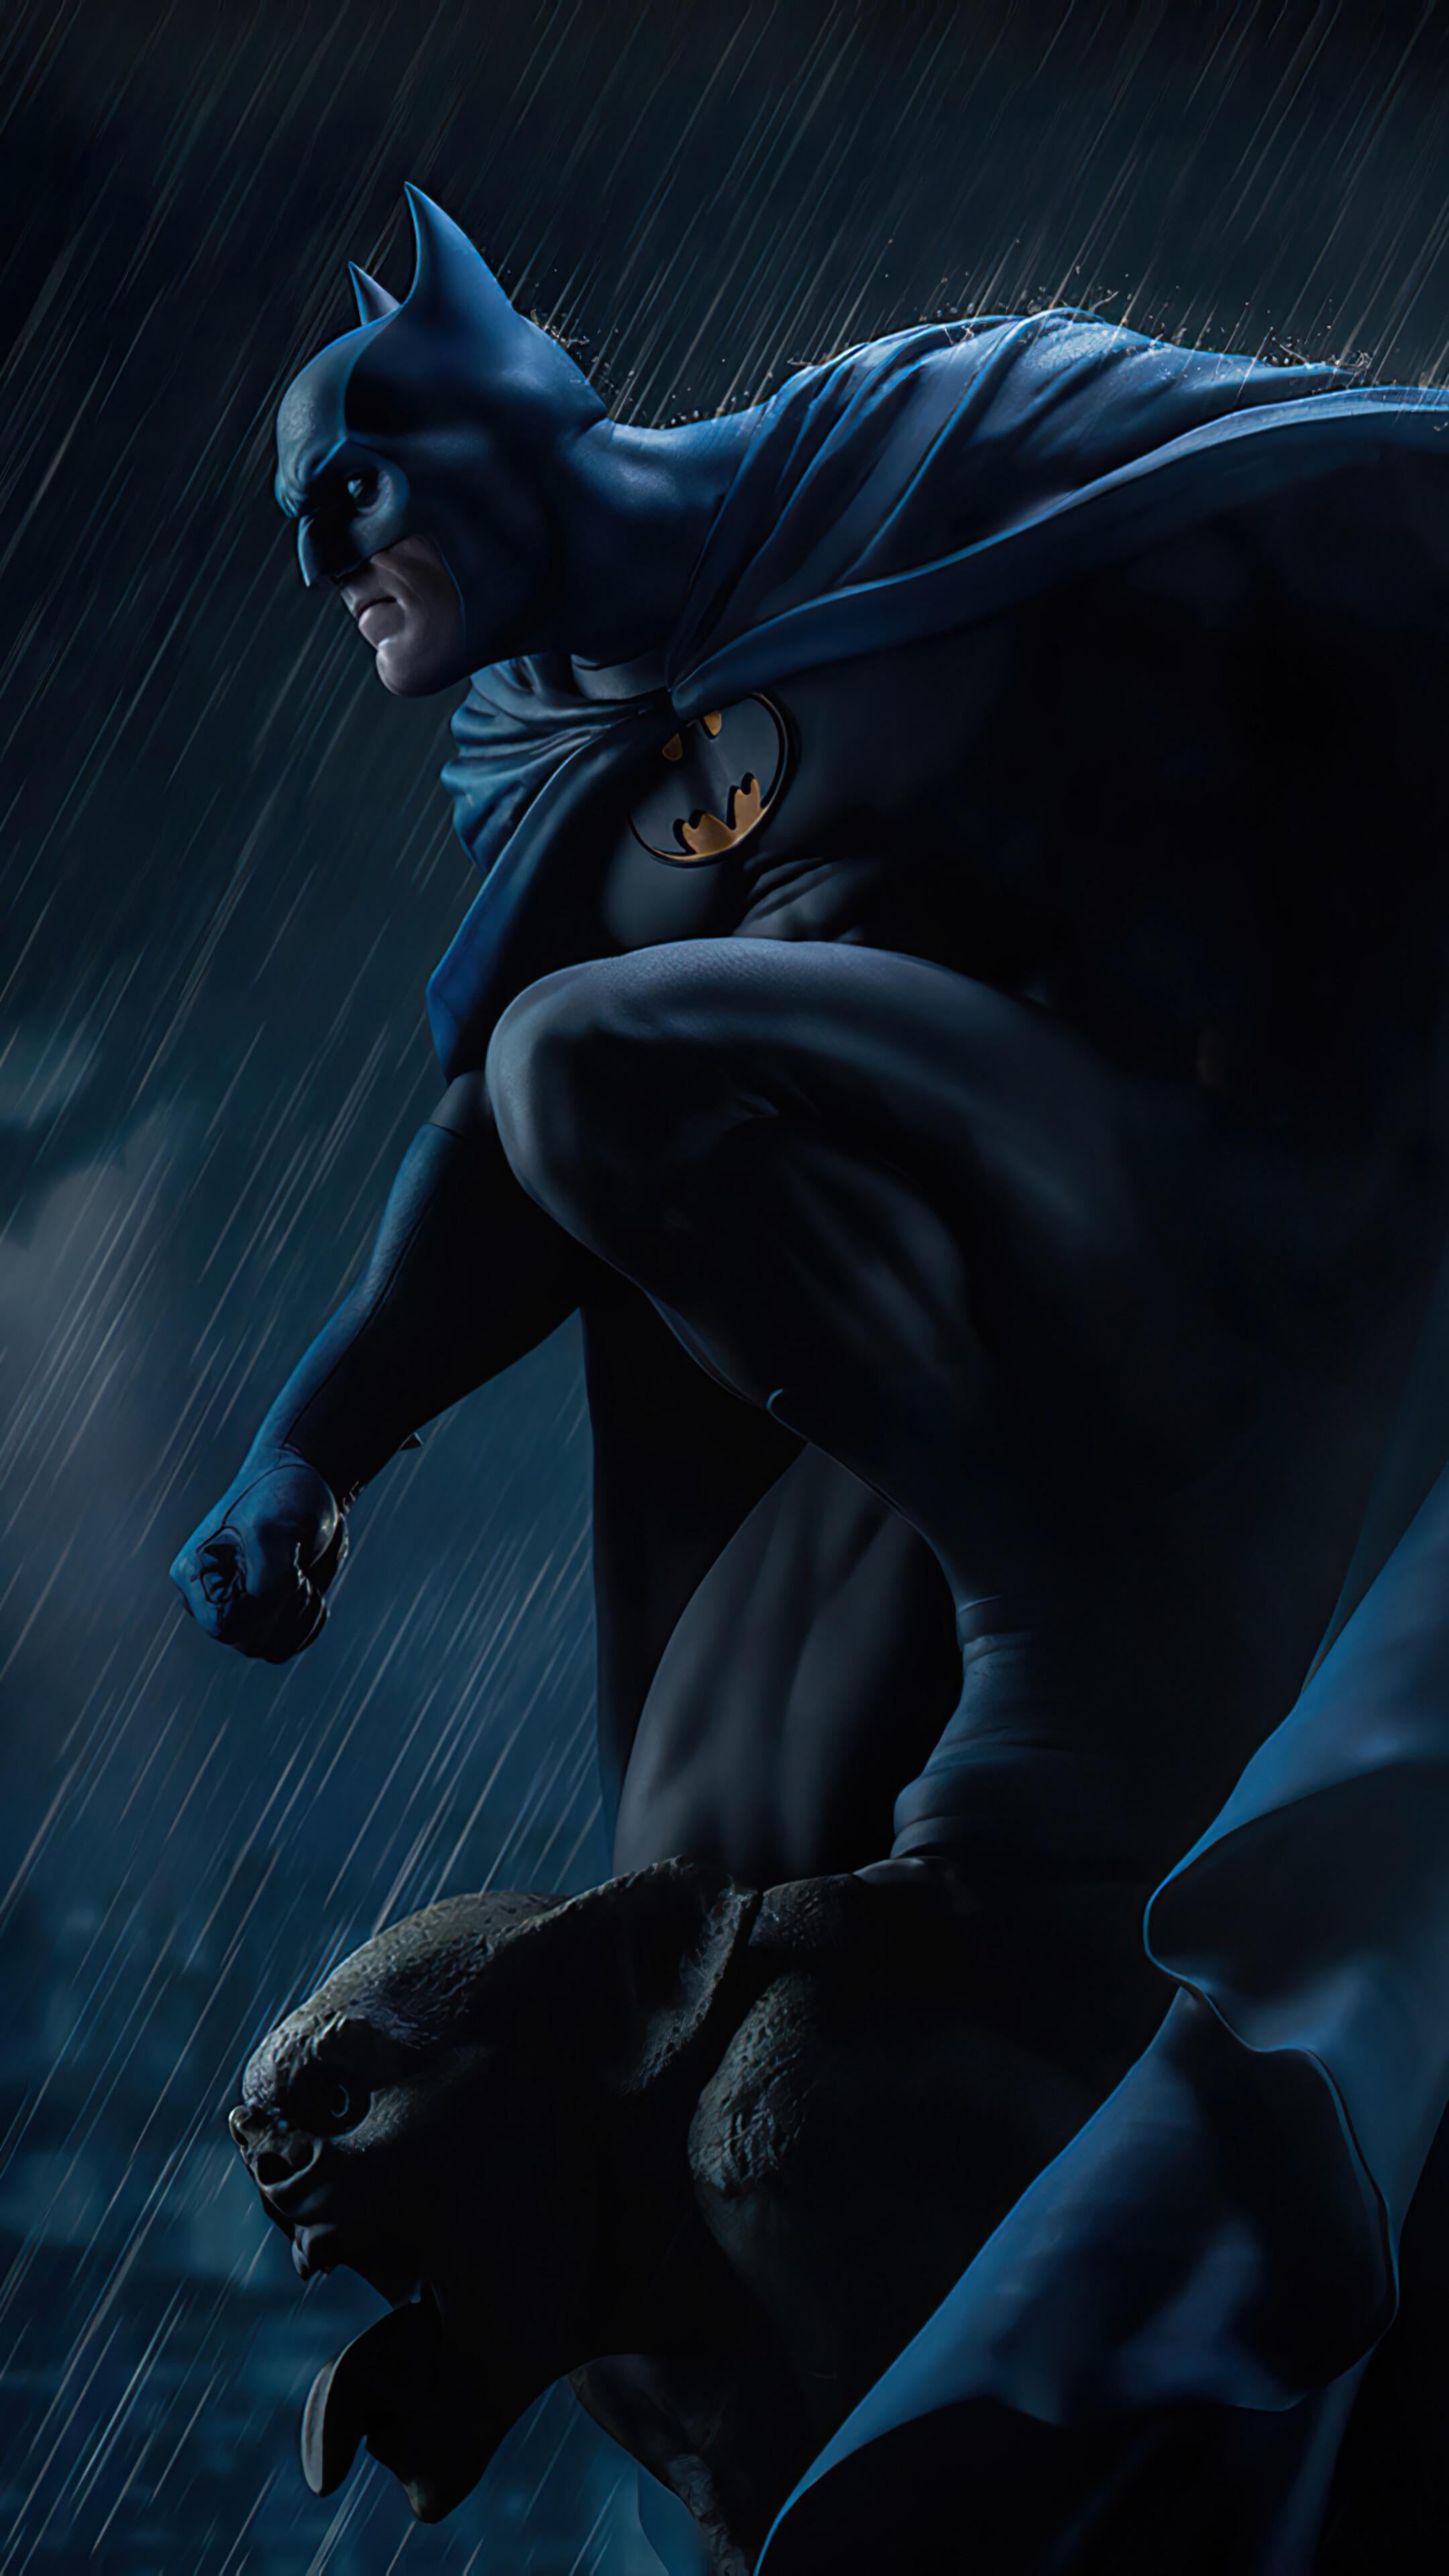 Wallpaper Batman, Superhero, dc Comics, Art, DC Universe, Background -  Download Free Image